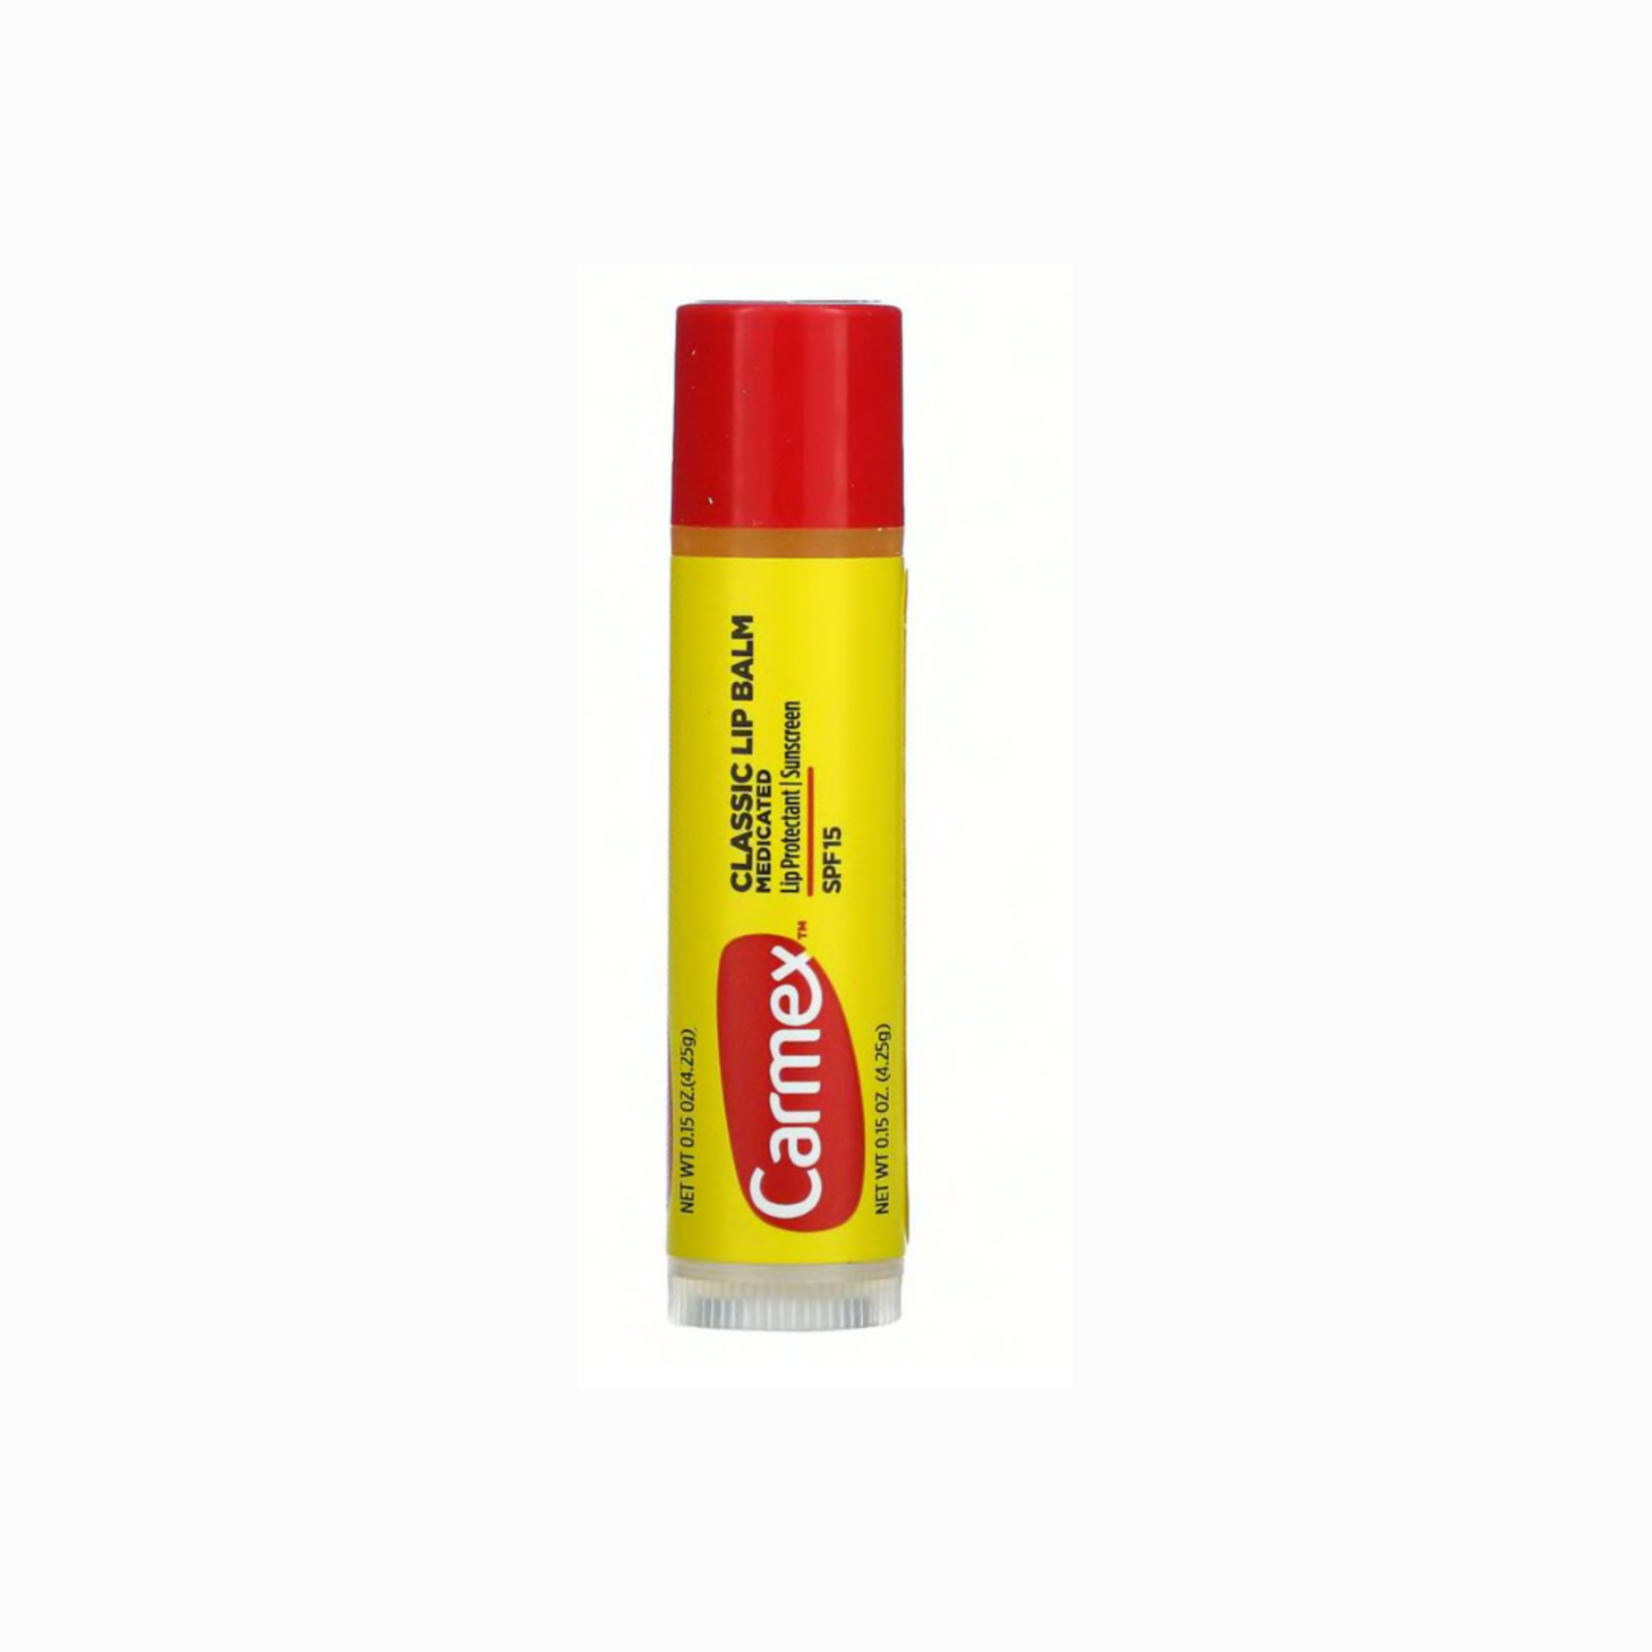 Carmex Carmex Classic Lip Balm Medicated SPF 15